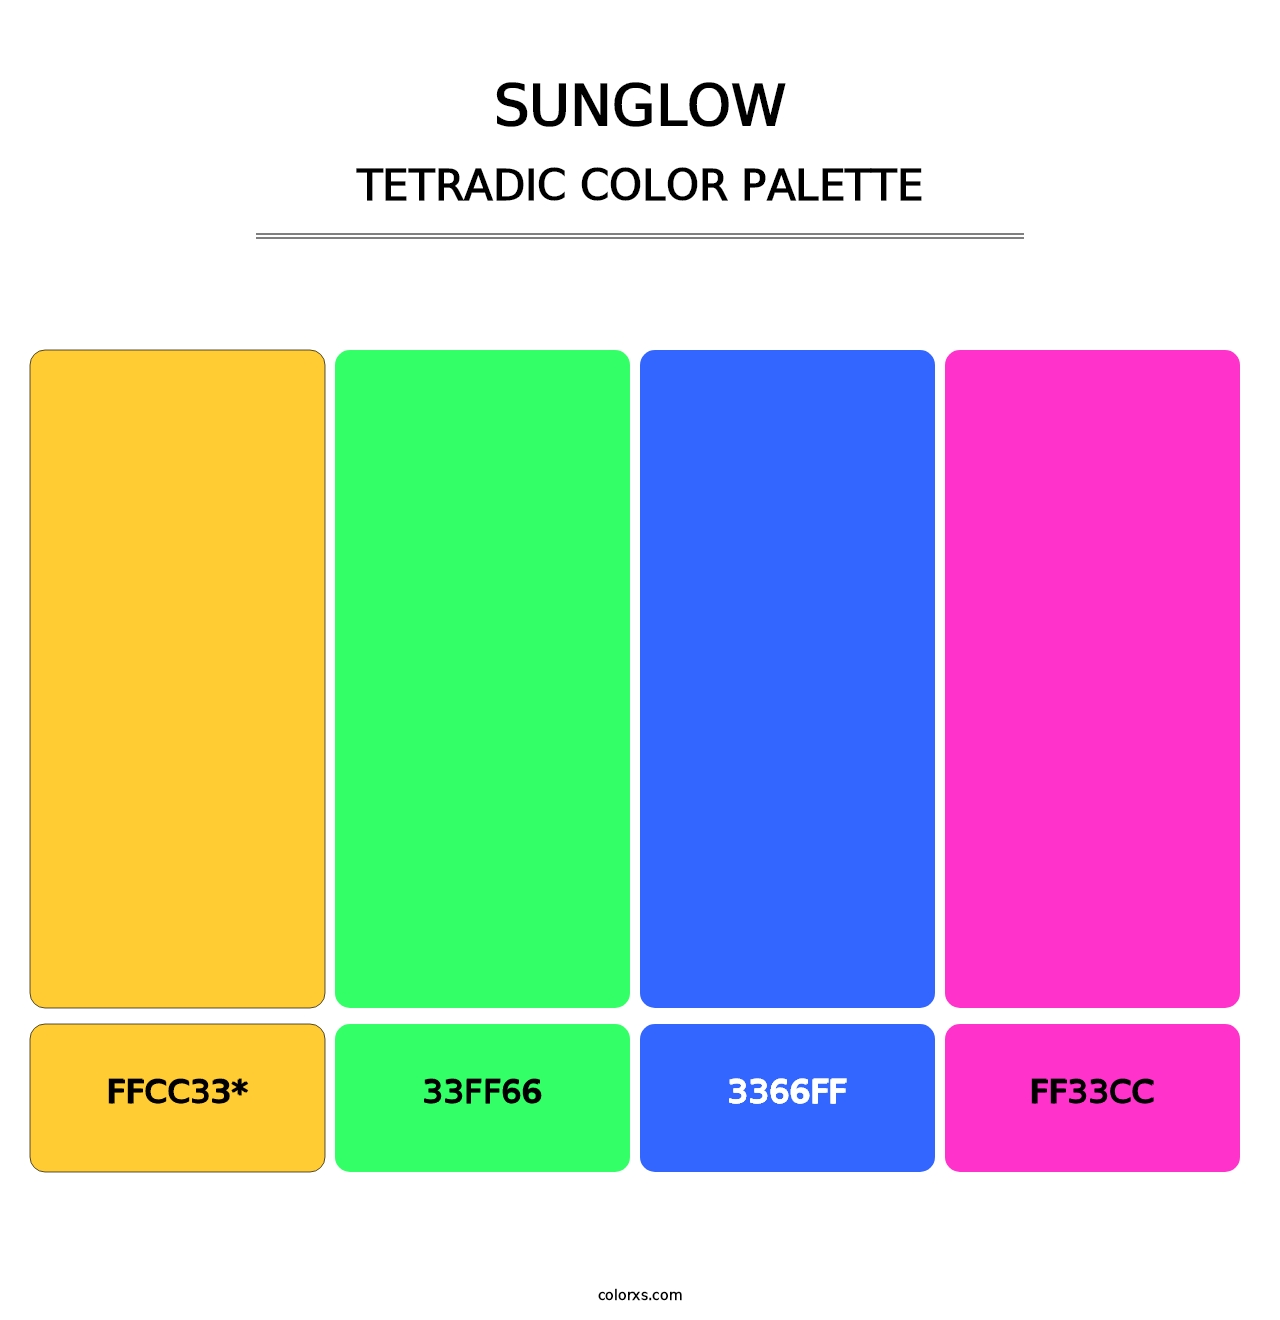 Sunglow - Tetradic Color Palette